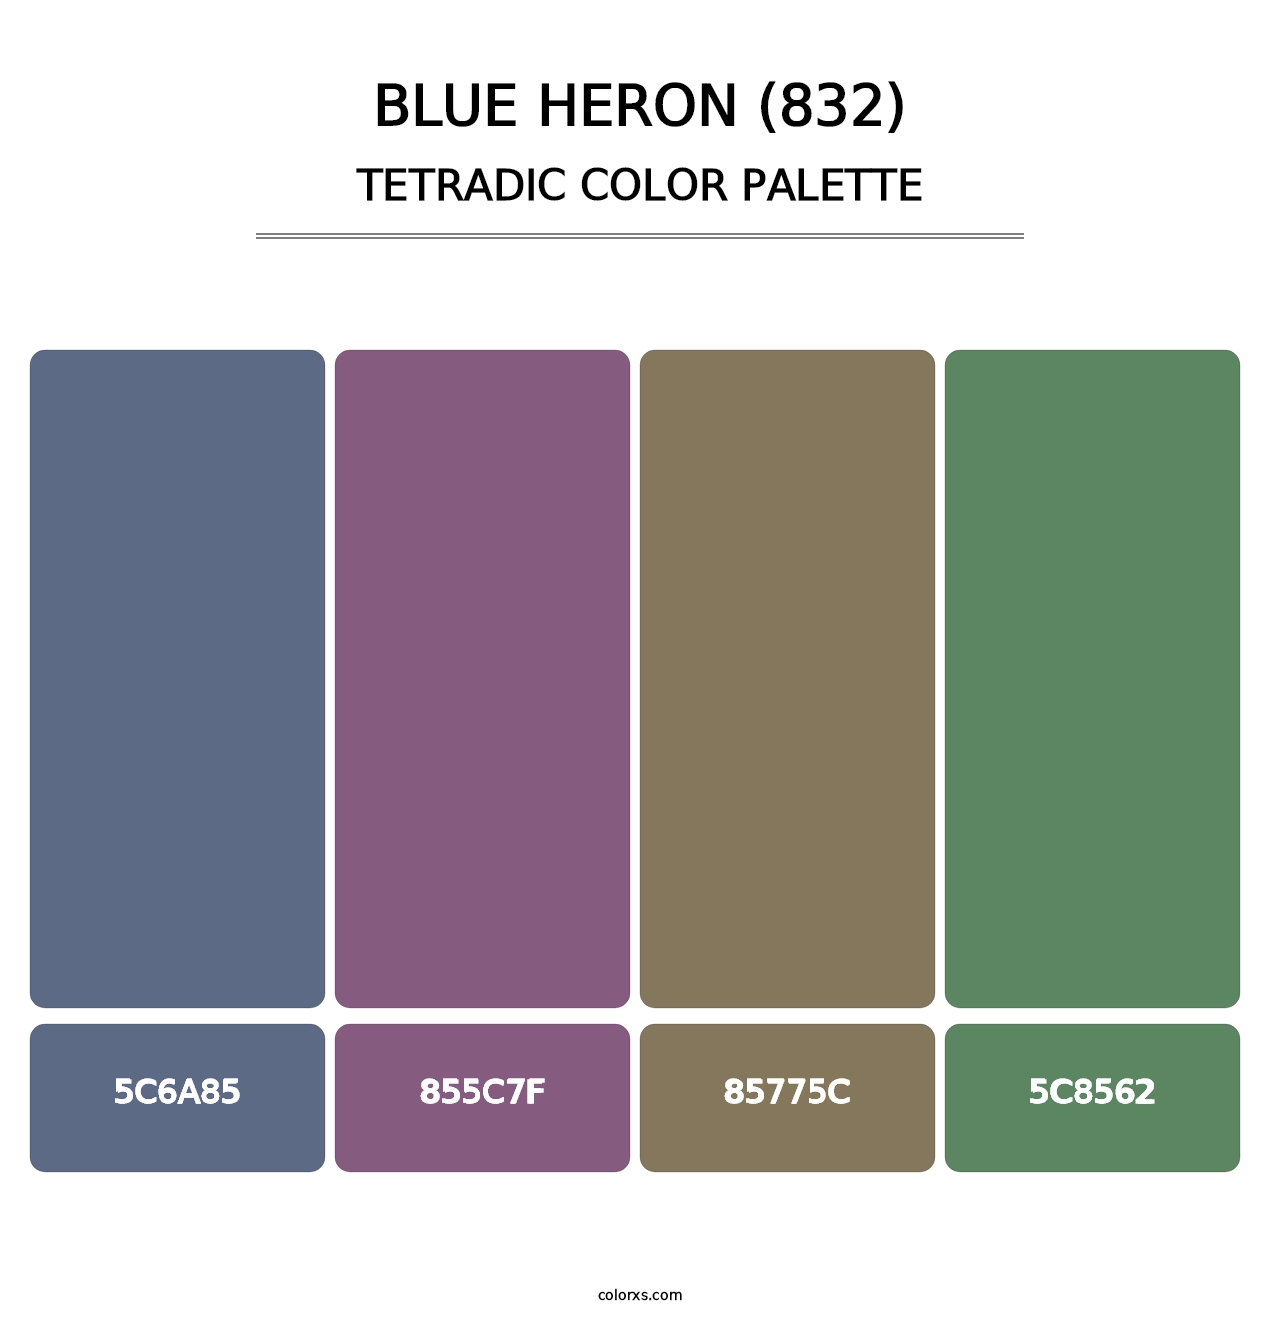 Blue Heron (832) - Tetradic Color Palette